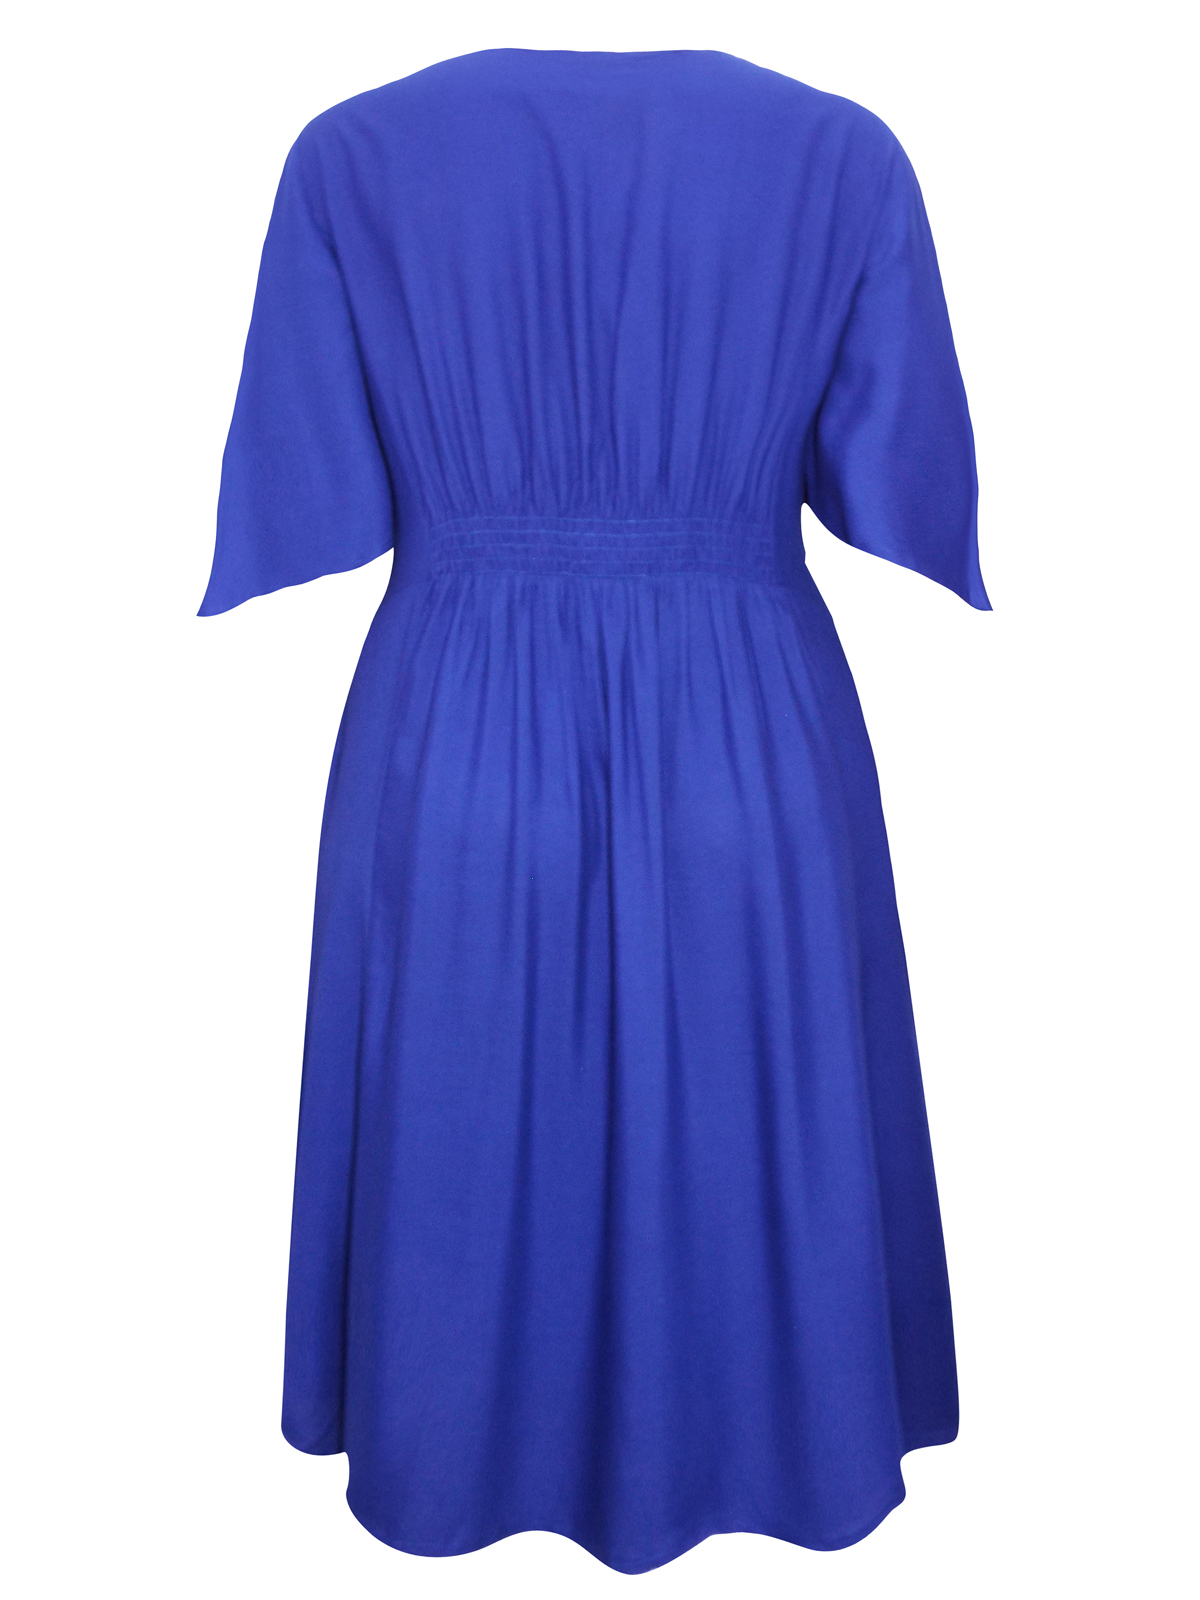 eaonplus ROYAL-BLUE Short Sleeve Lace Up Shift Dress - Plus Size 18/20